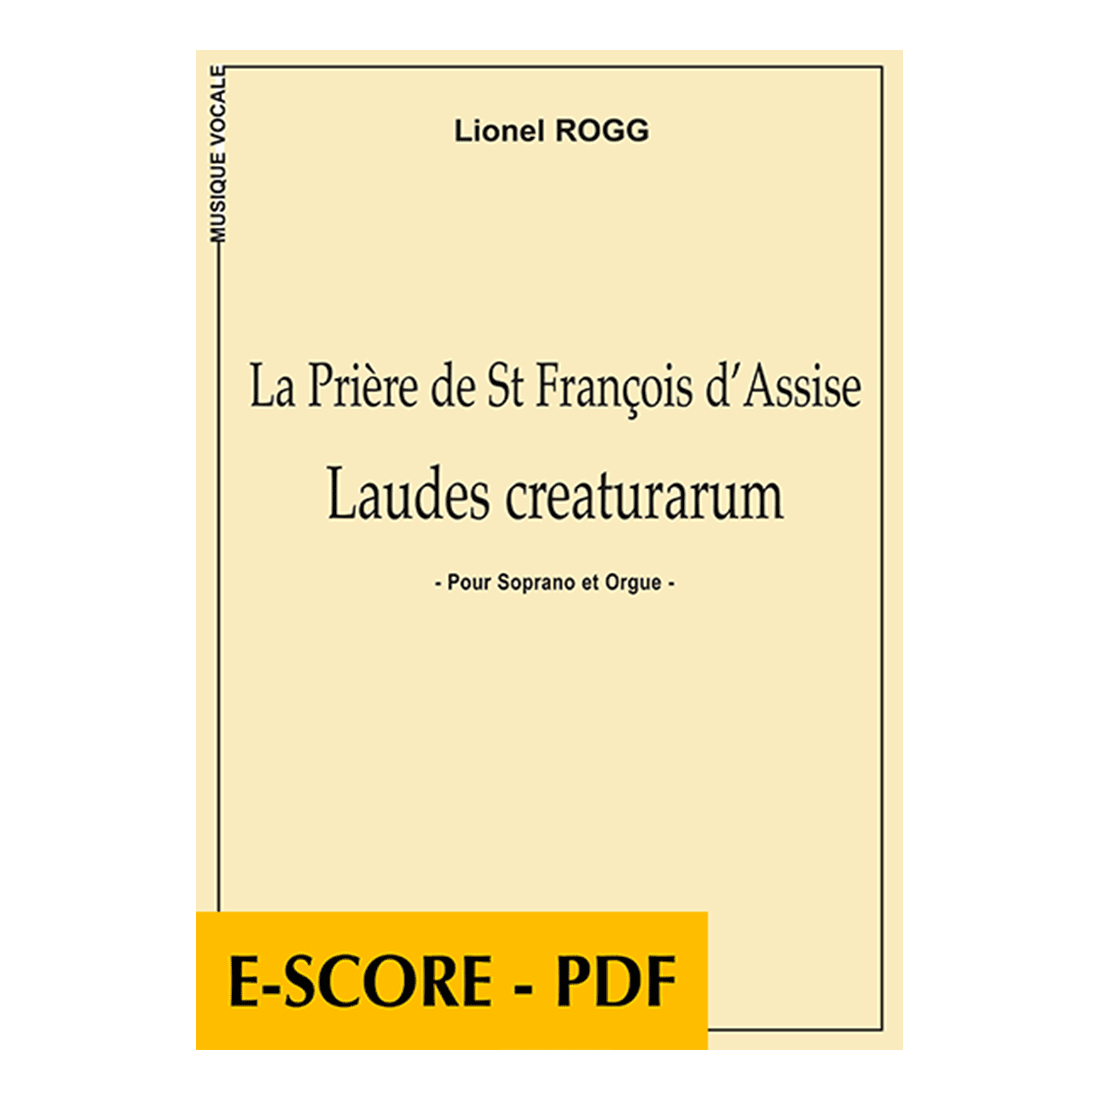 Laudes creaturarum pour soprano et orgue - E-score PDF